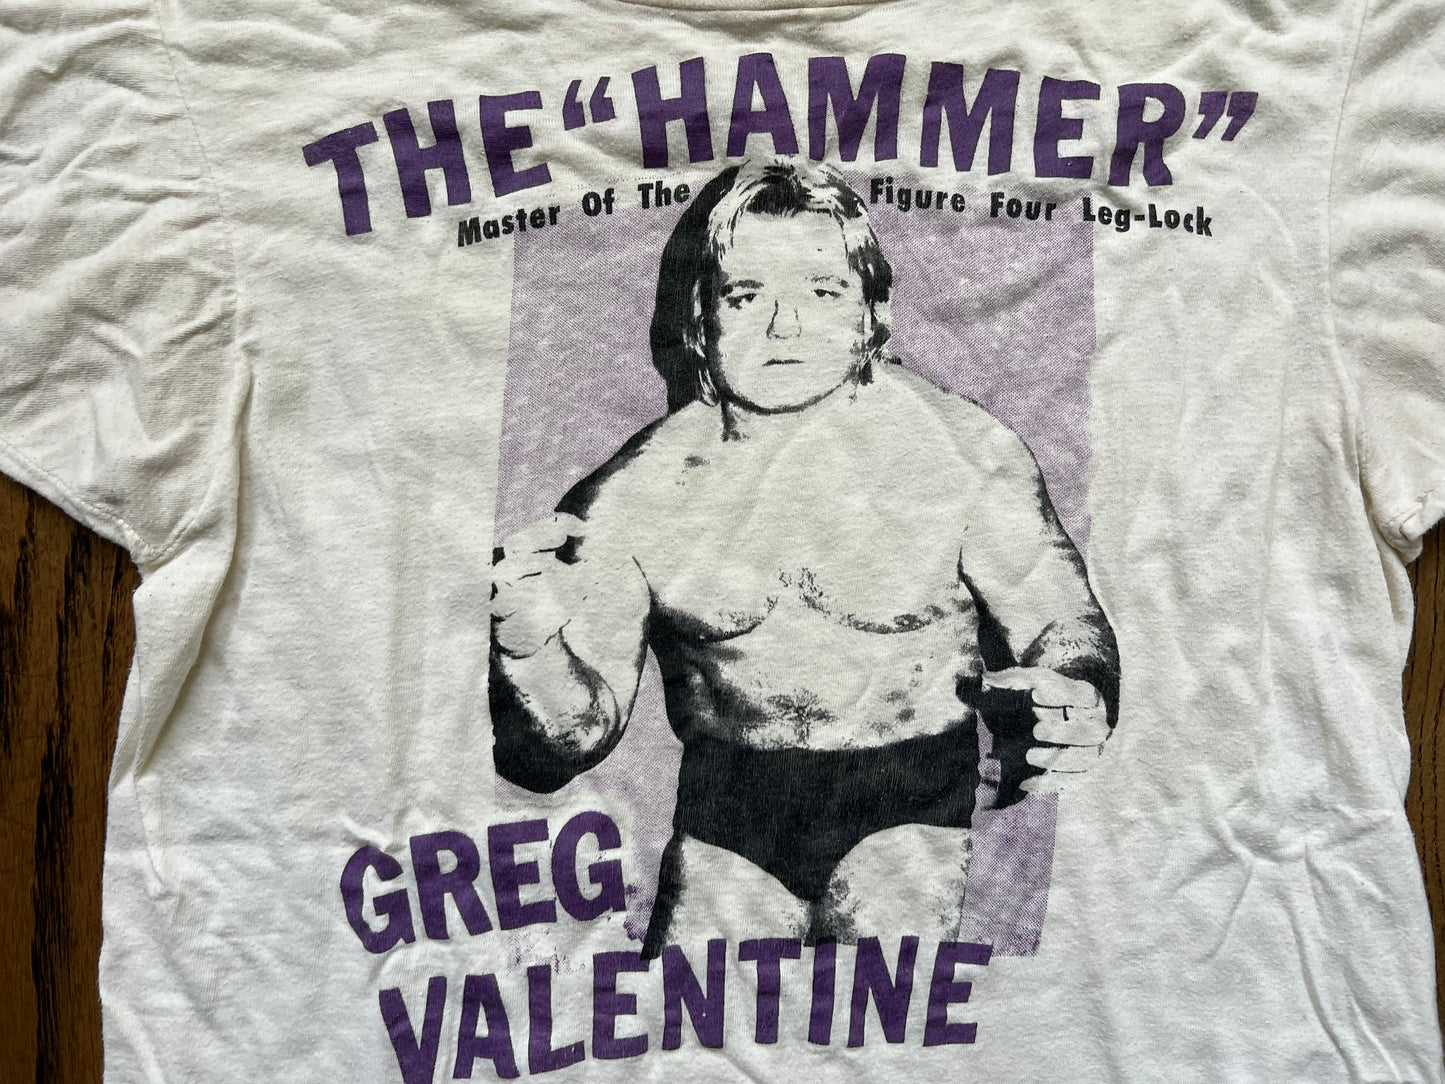 1984 NWA Greg “The Hammer” Valentine “Master of the Figure Four” shirt